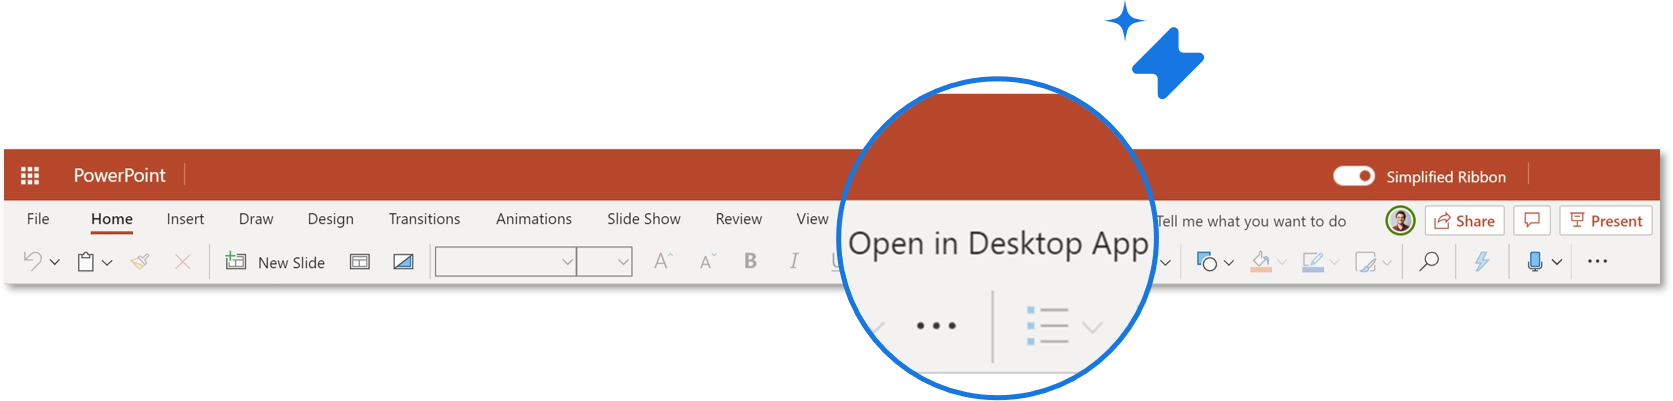 UpSlide ribbon in PowerPoint highlighting the Open in Desktop App button